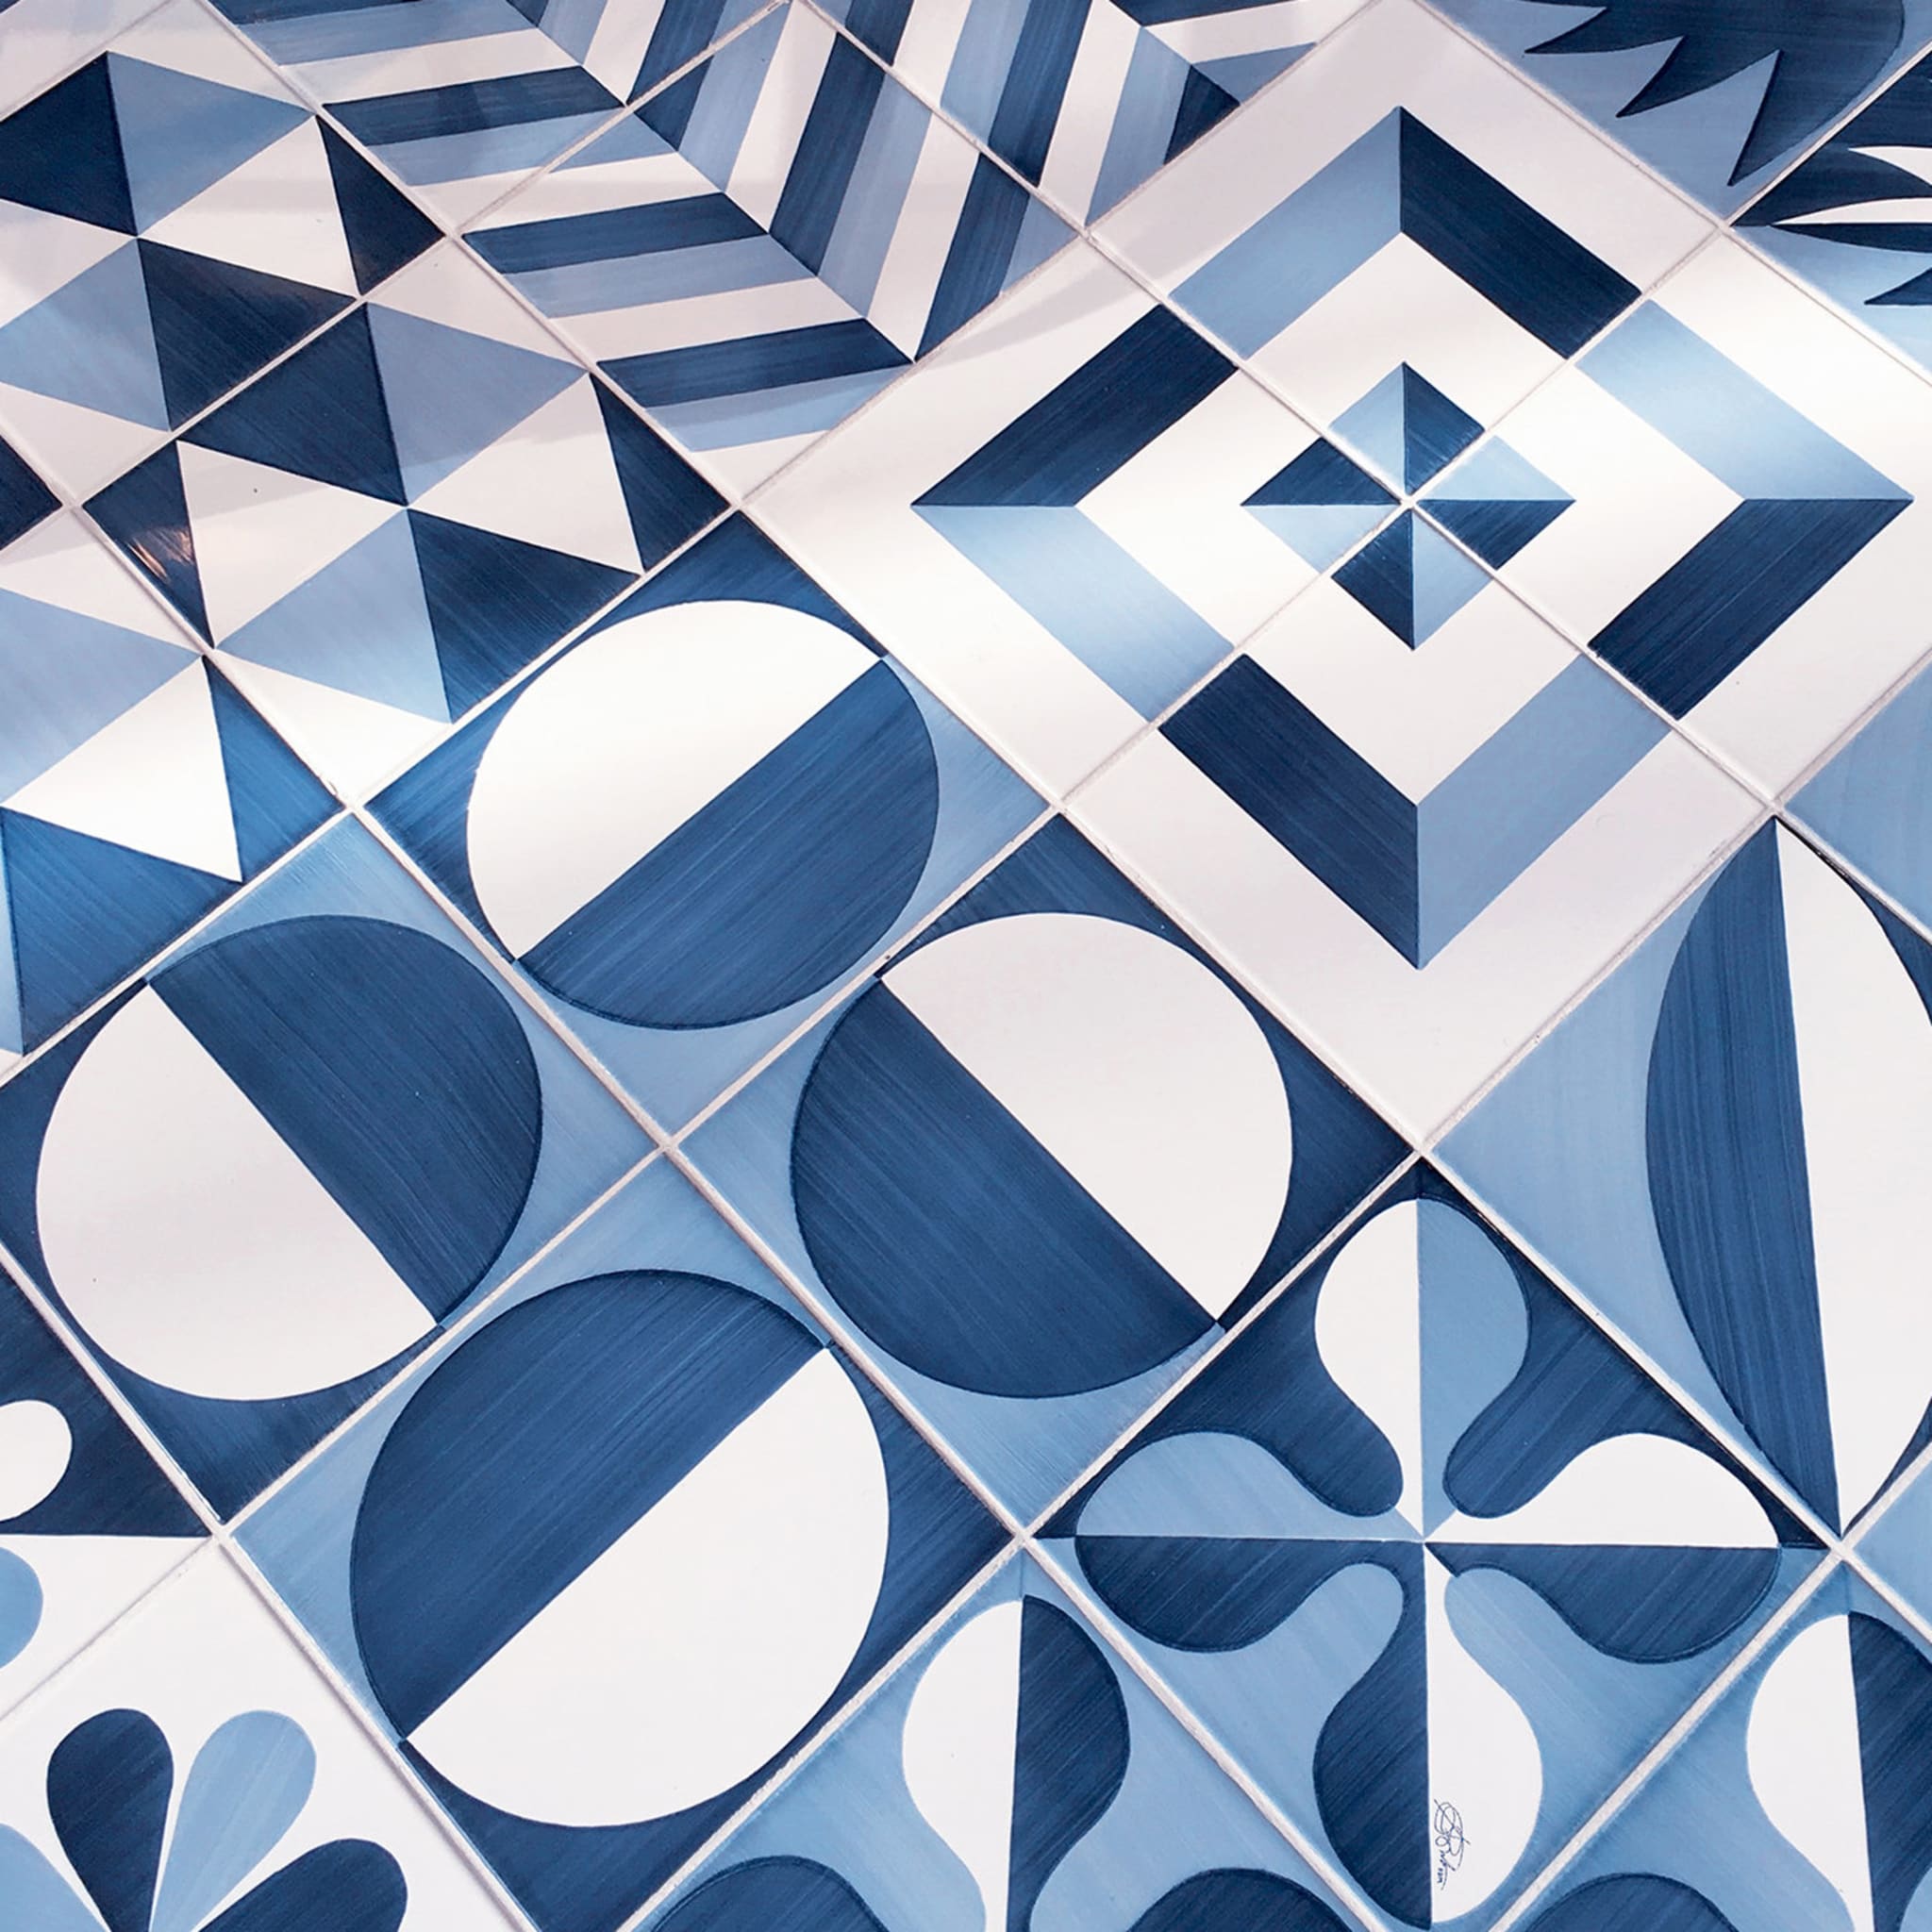 Set of 25 Decoration Type 4 Tiles Blu Ponti Collection by Gio Ponti - Alternative view 5